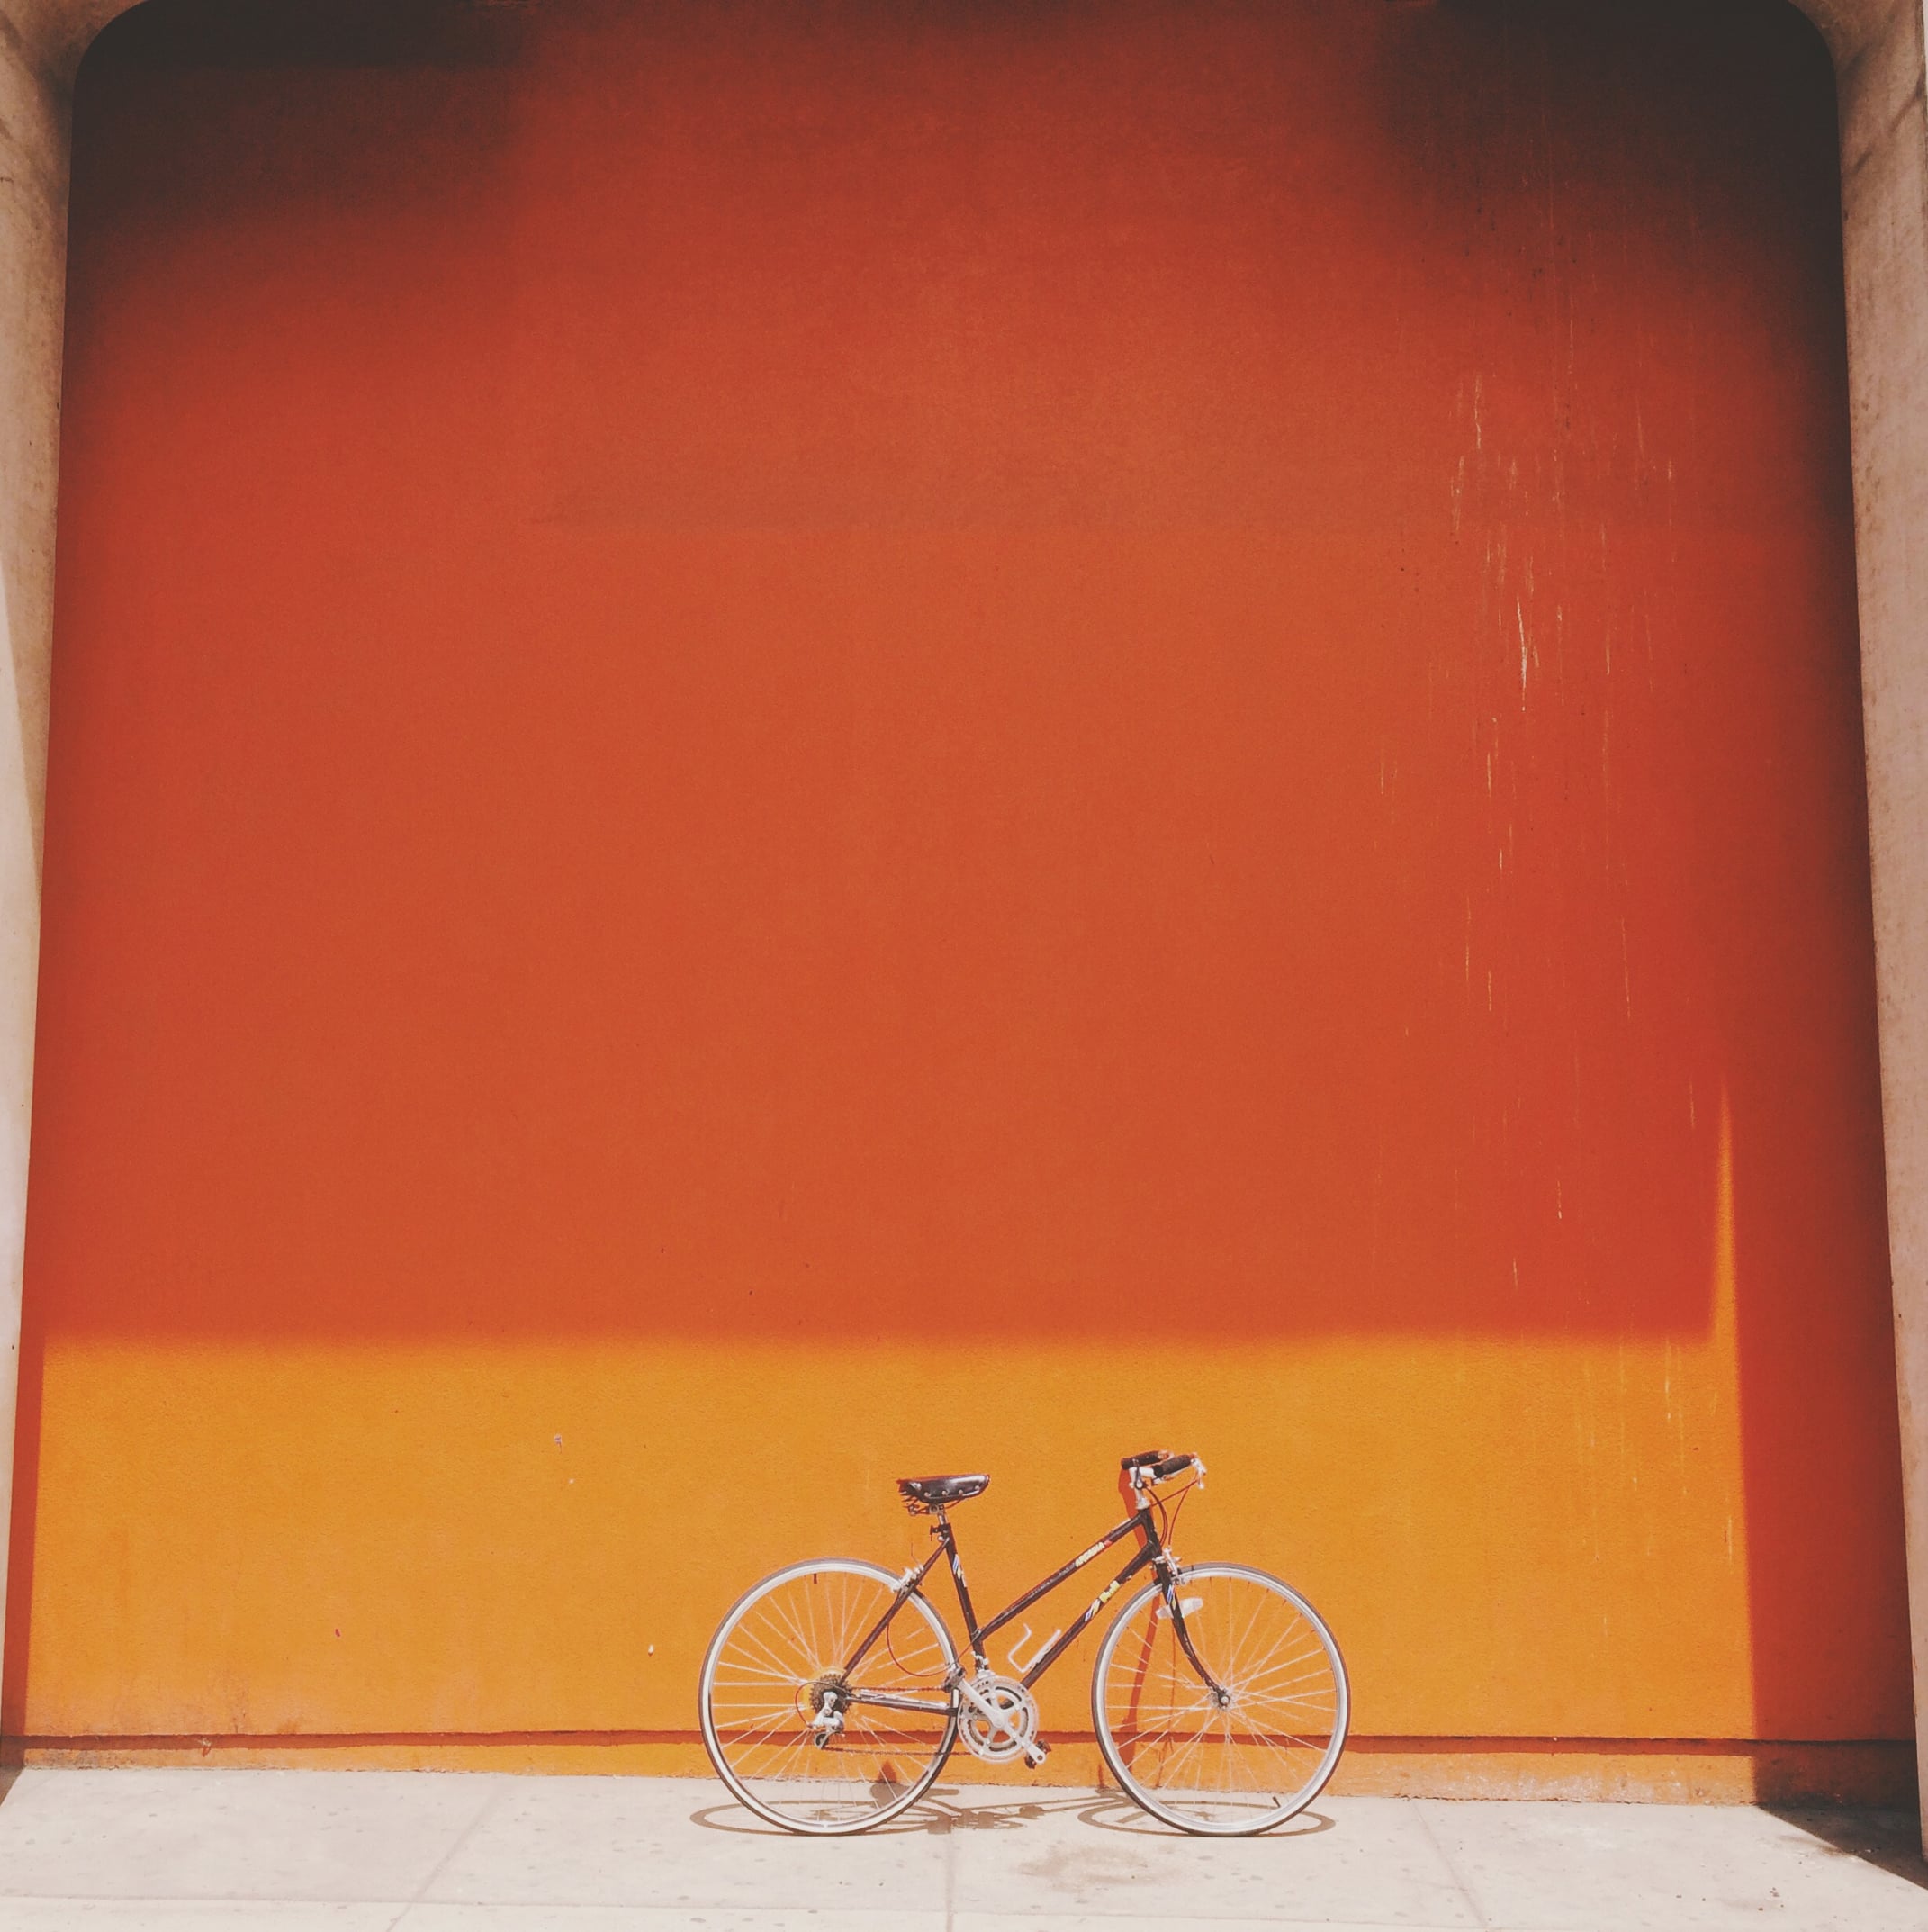 Bike in colorful wall.